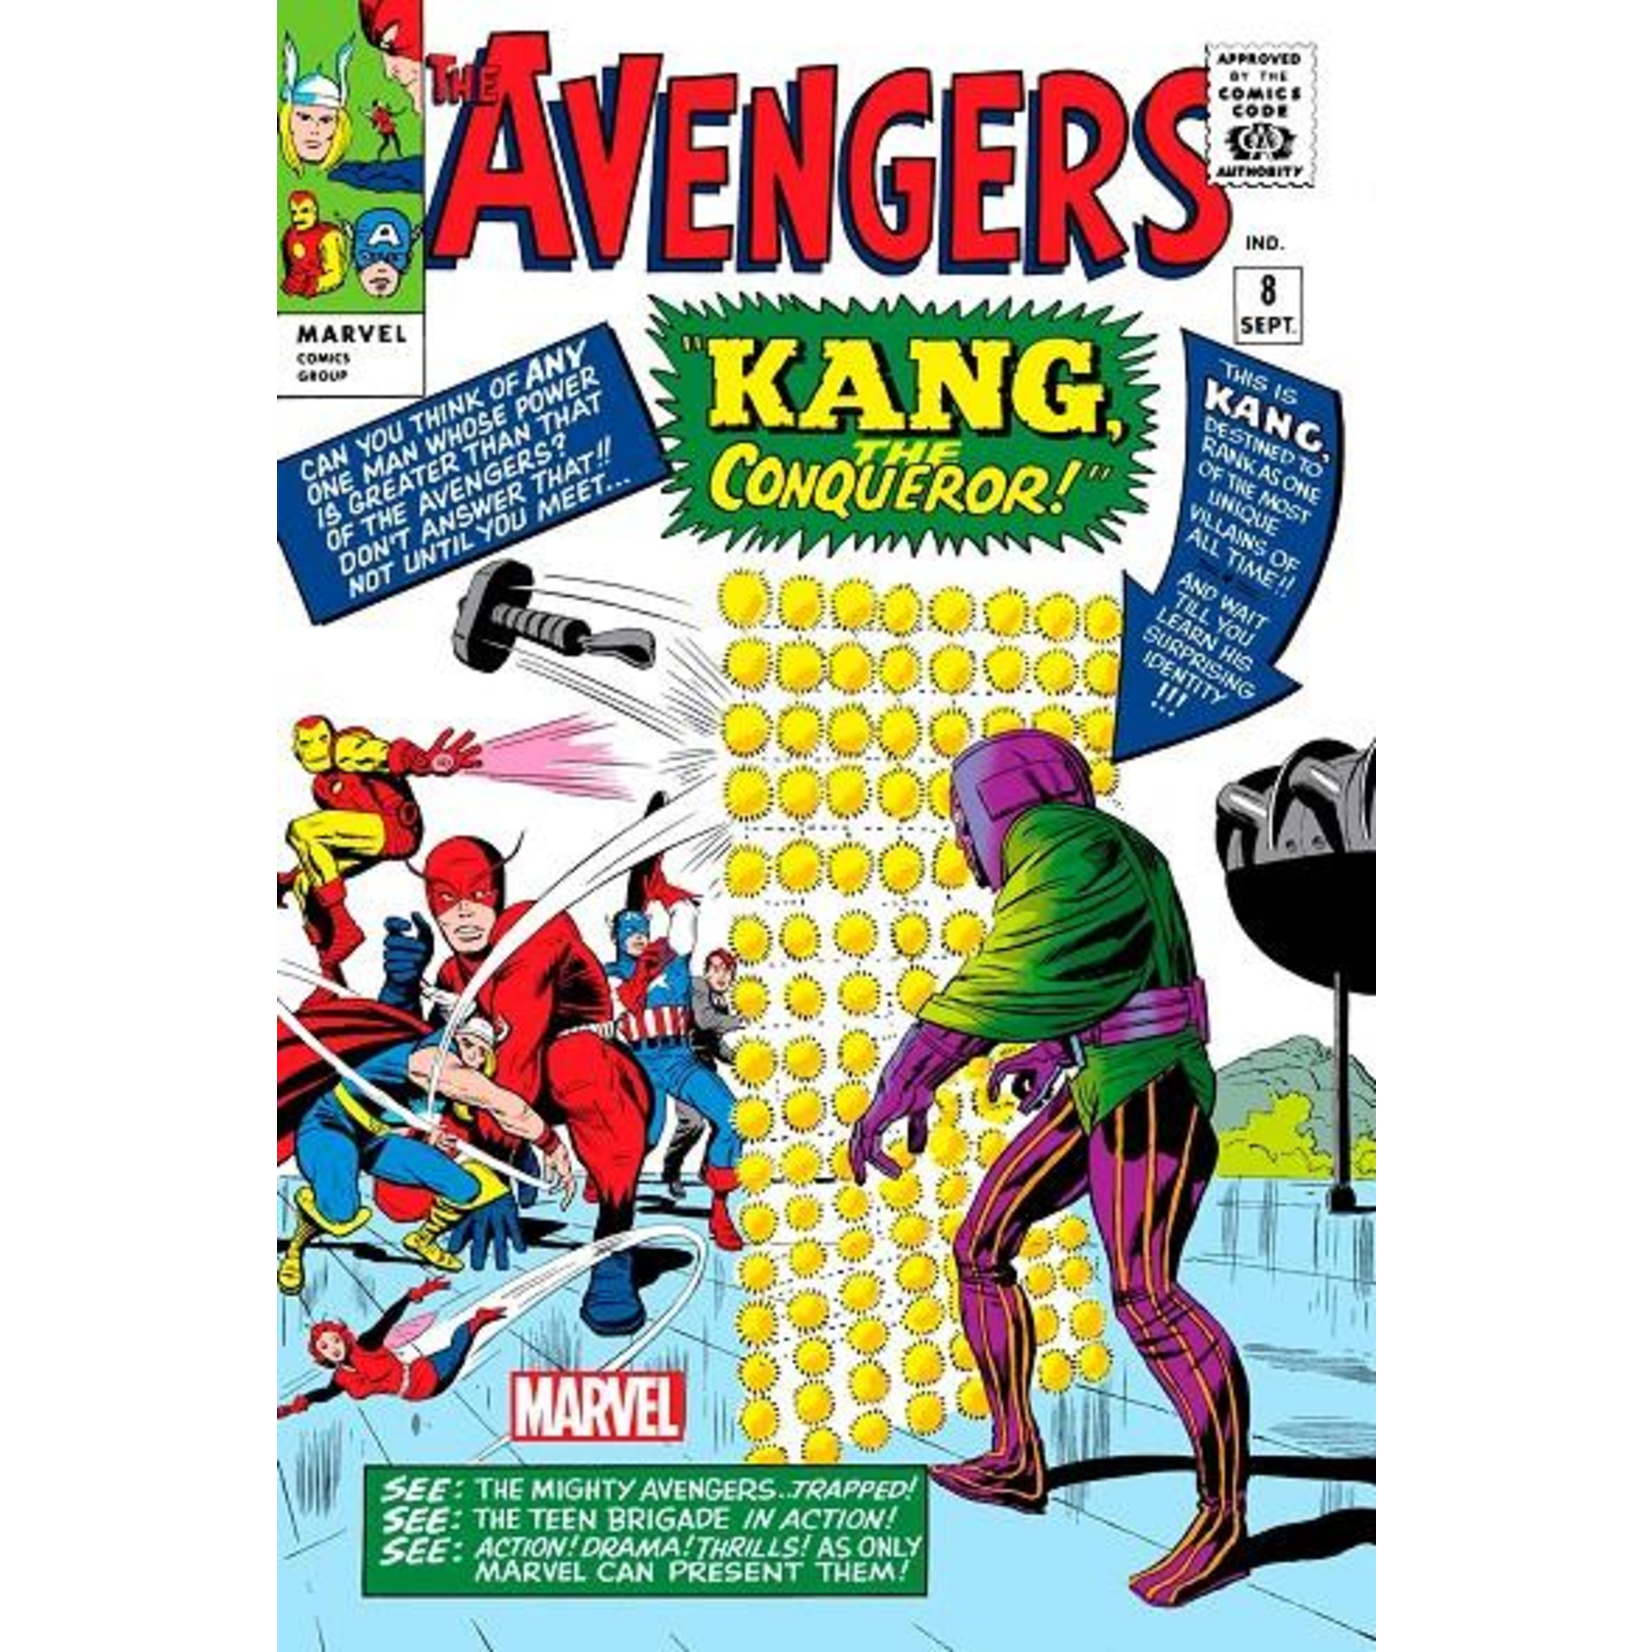 Marvel AVENGERS 8 FACSIMILE EDITION